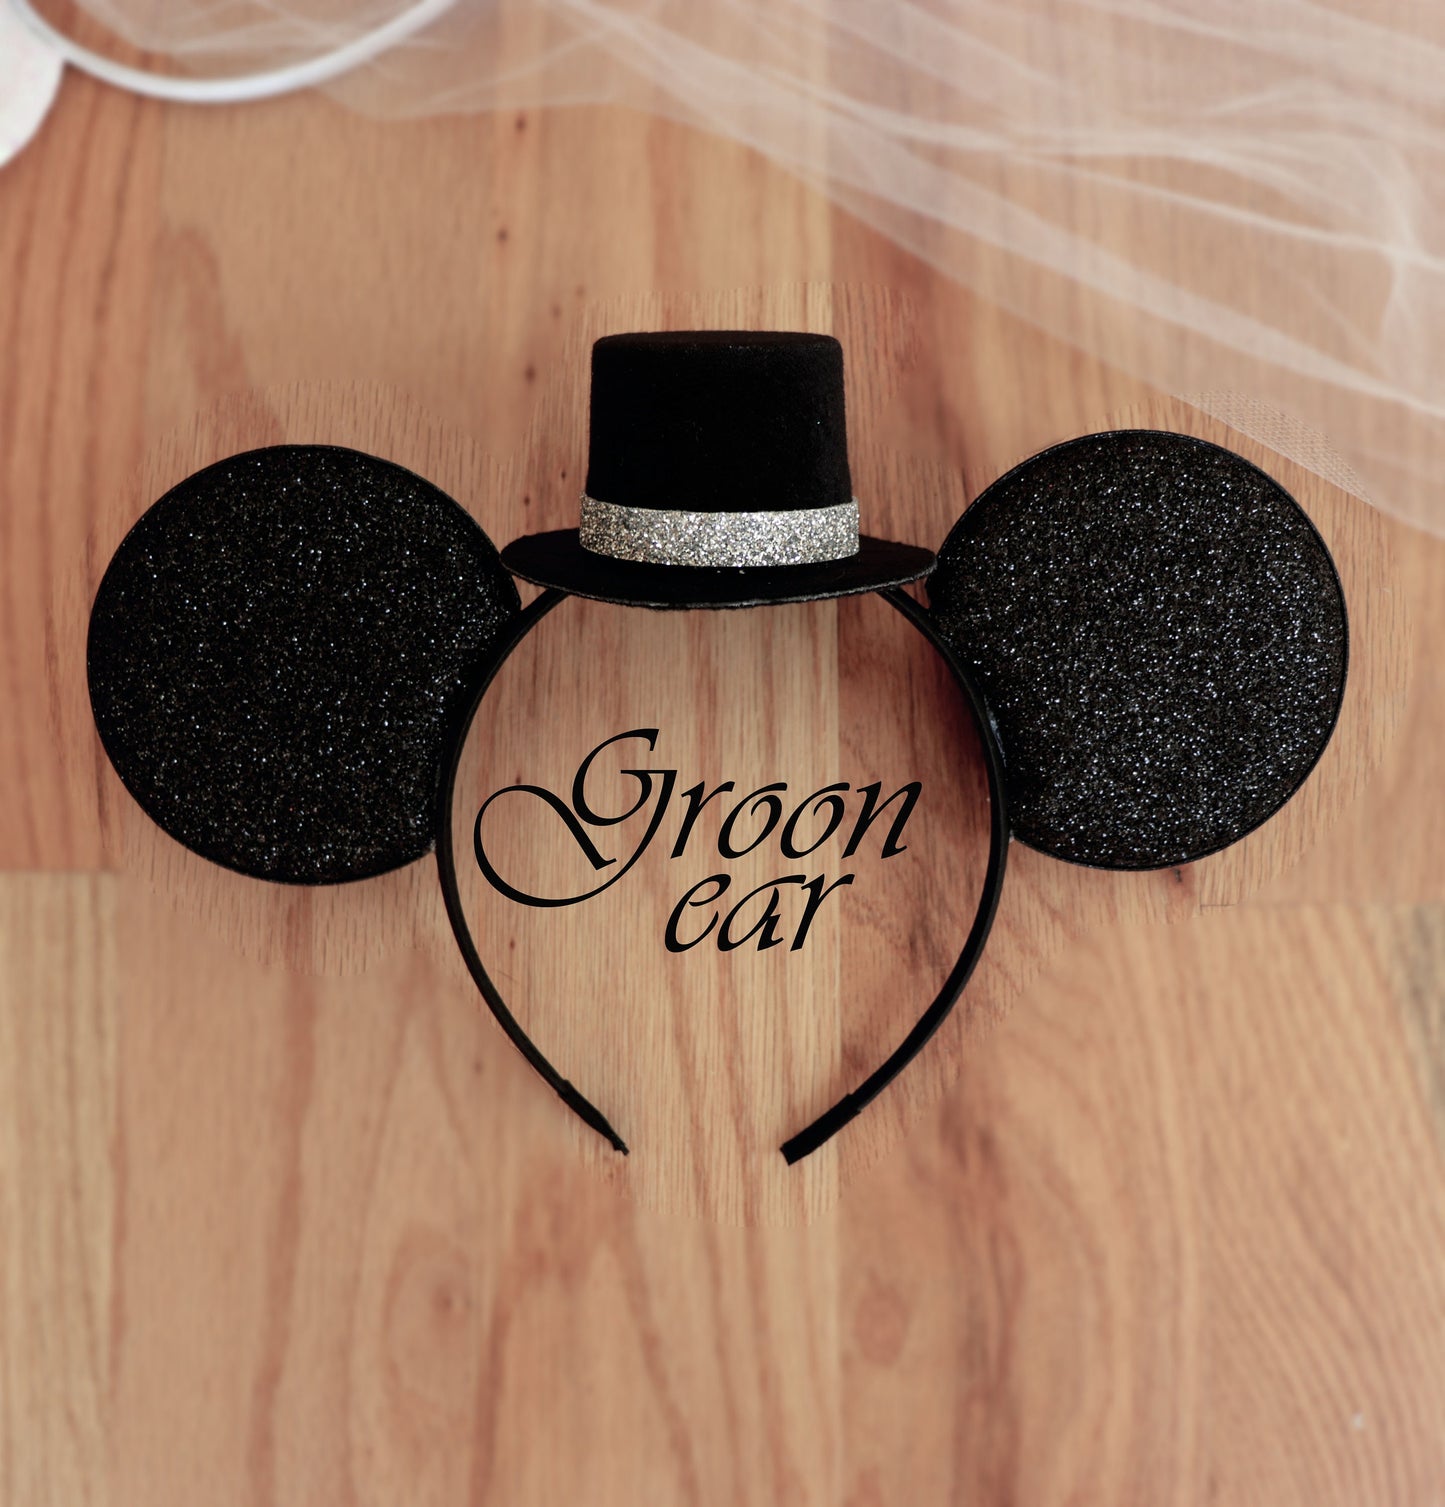 Halloween theme Bride and Groom Mickey Ears